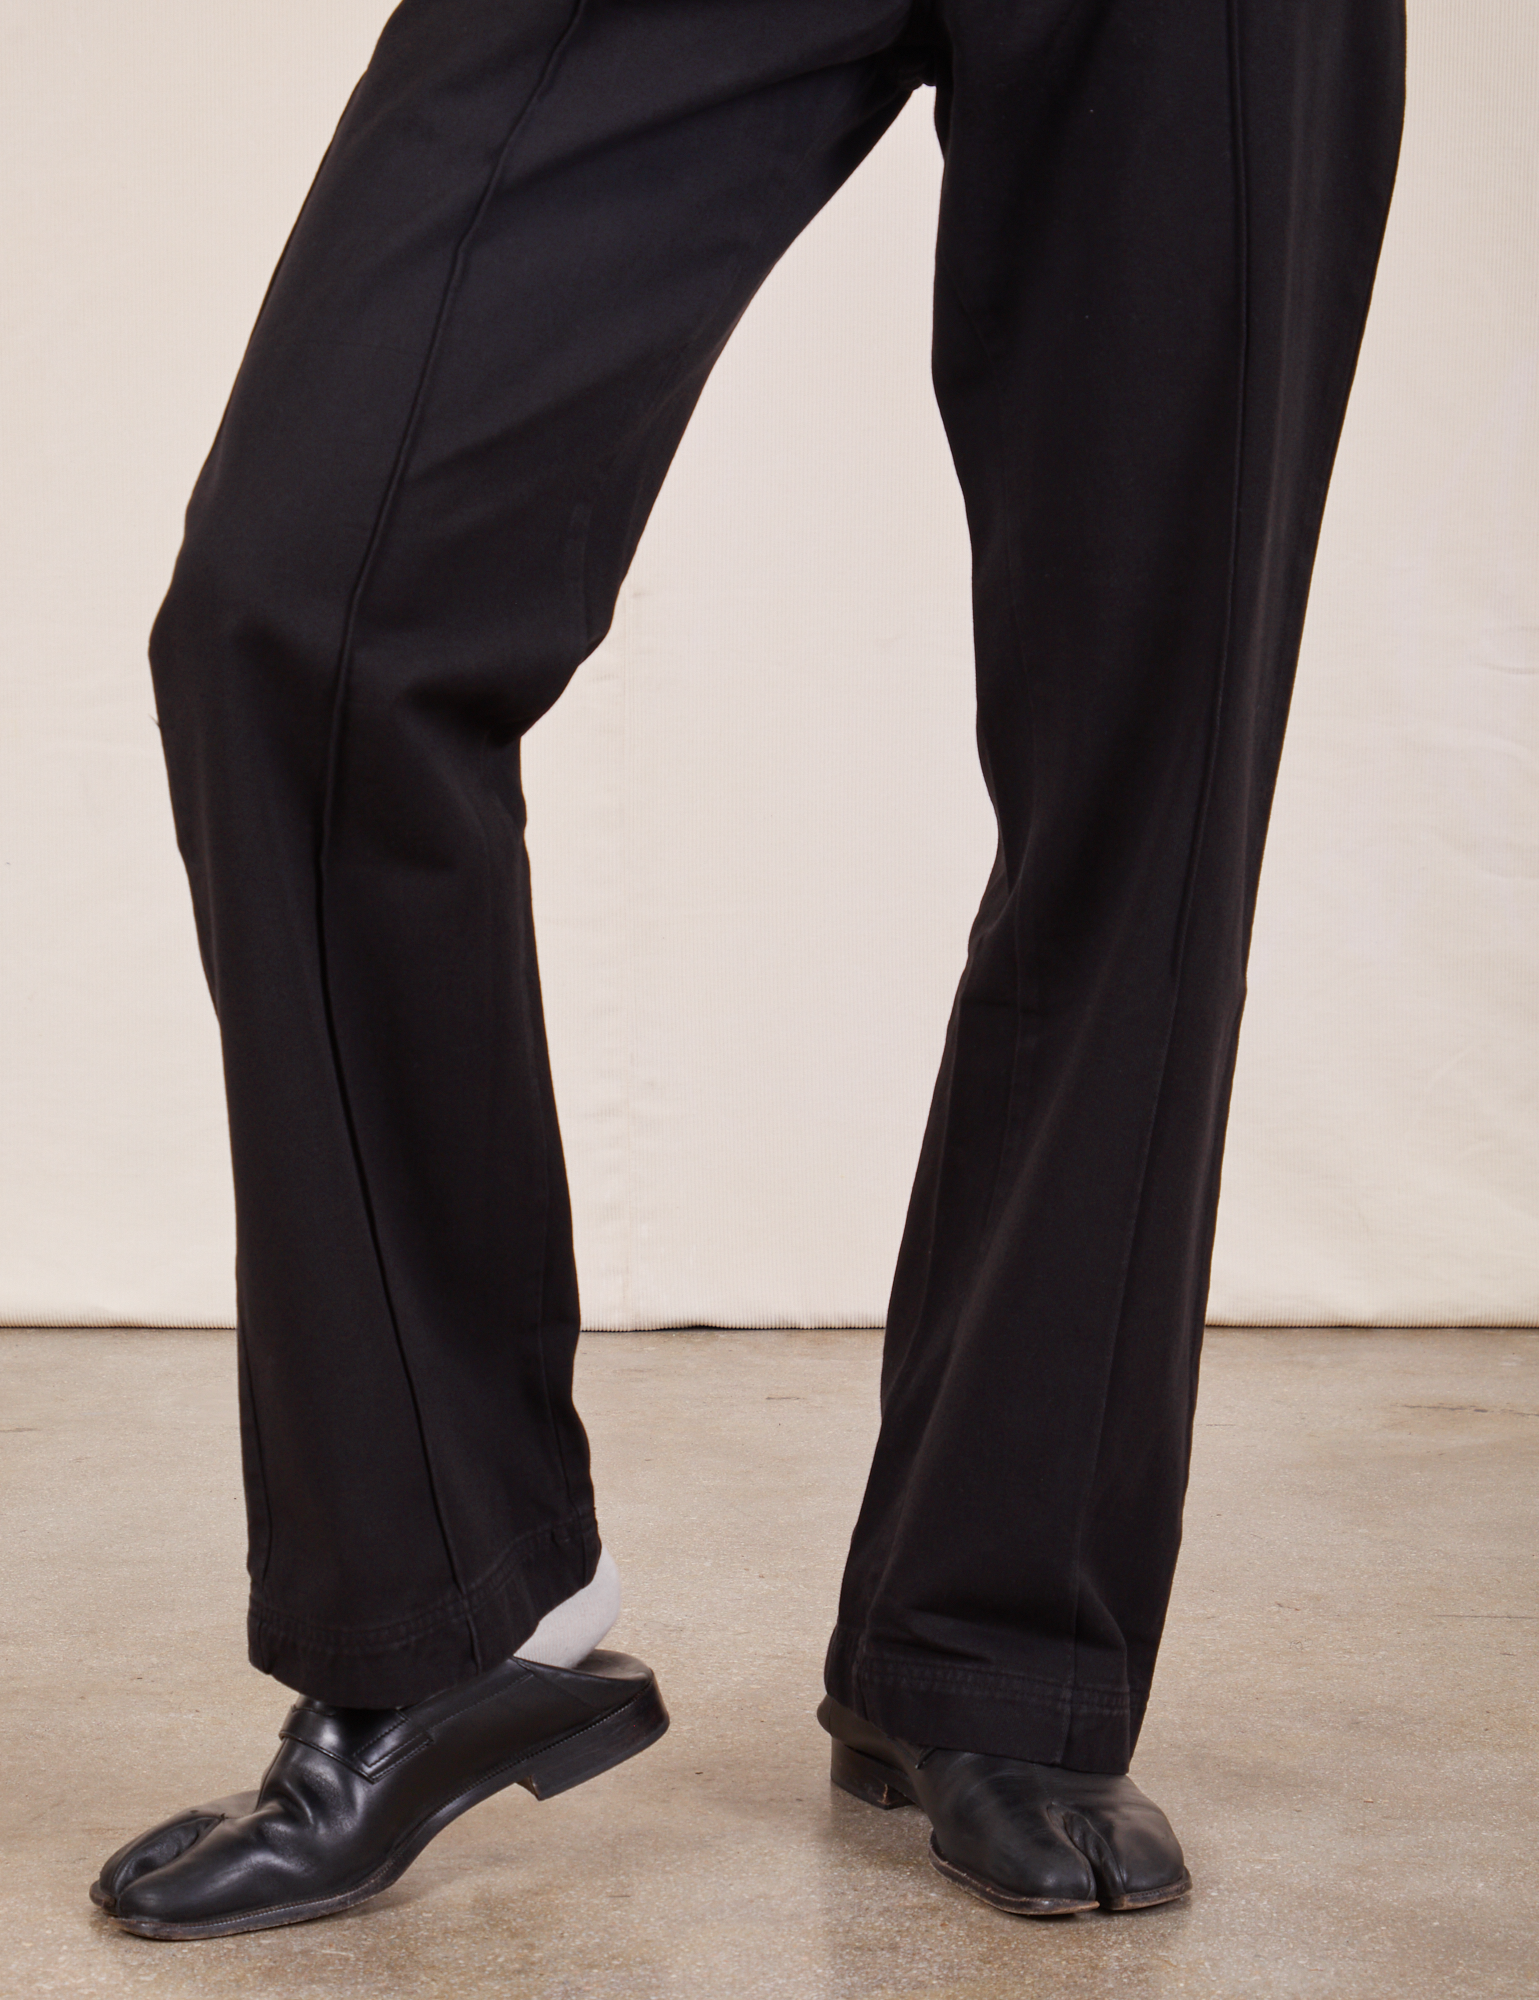 Western Pants in Basic Black pant leg close up on Jerrod